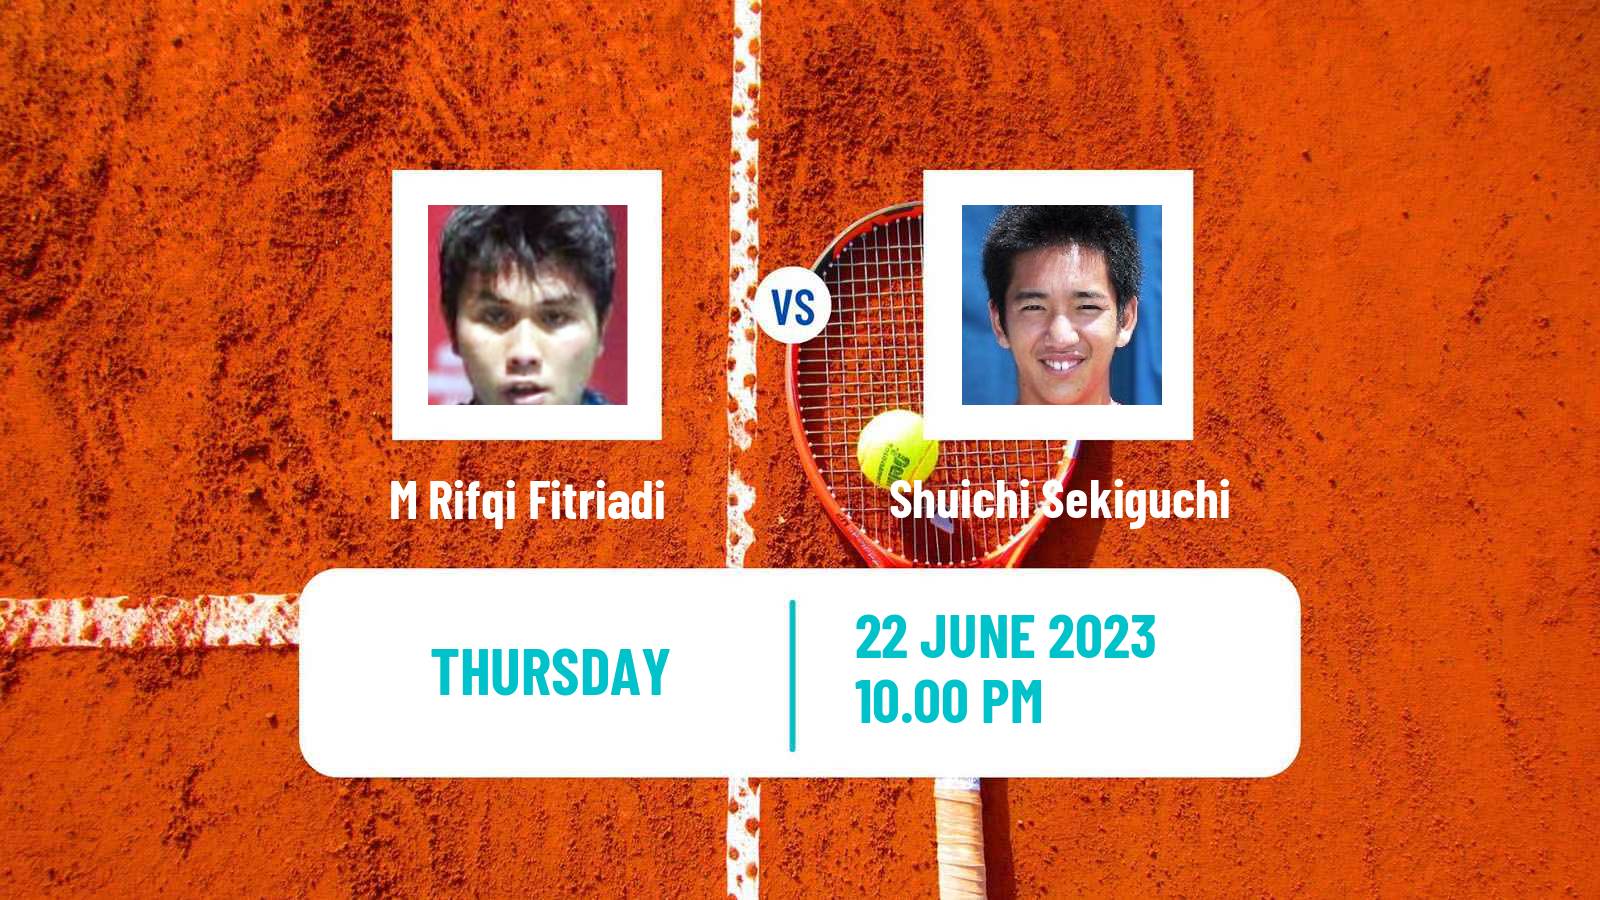 Tennis ITF M15 Jakarta 4 Men M Rifqi Fitriadi - Shuichi Sekiguchi